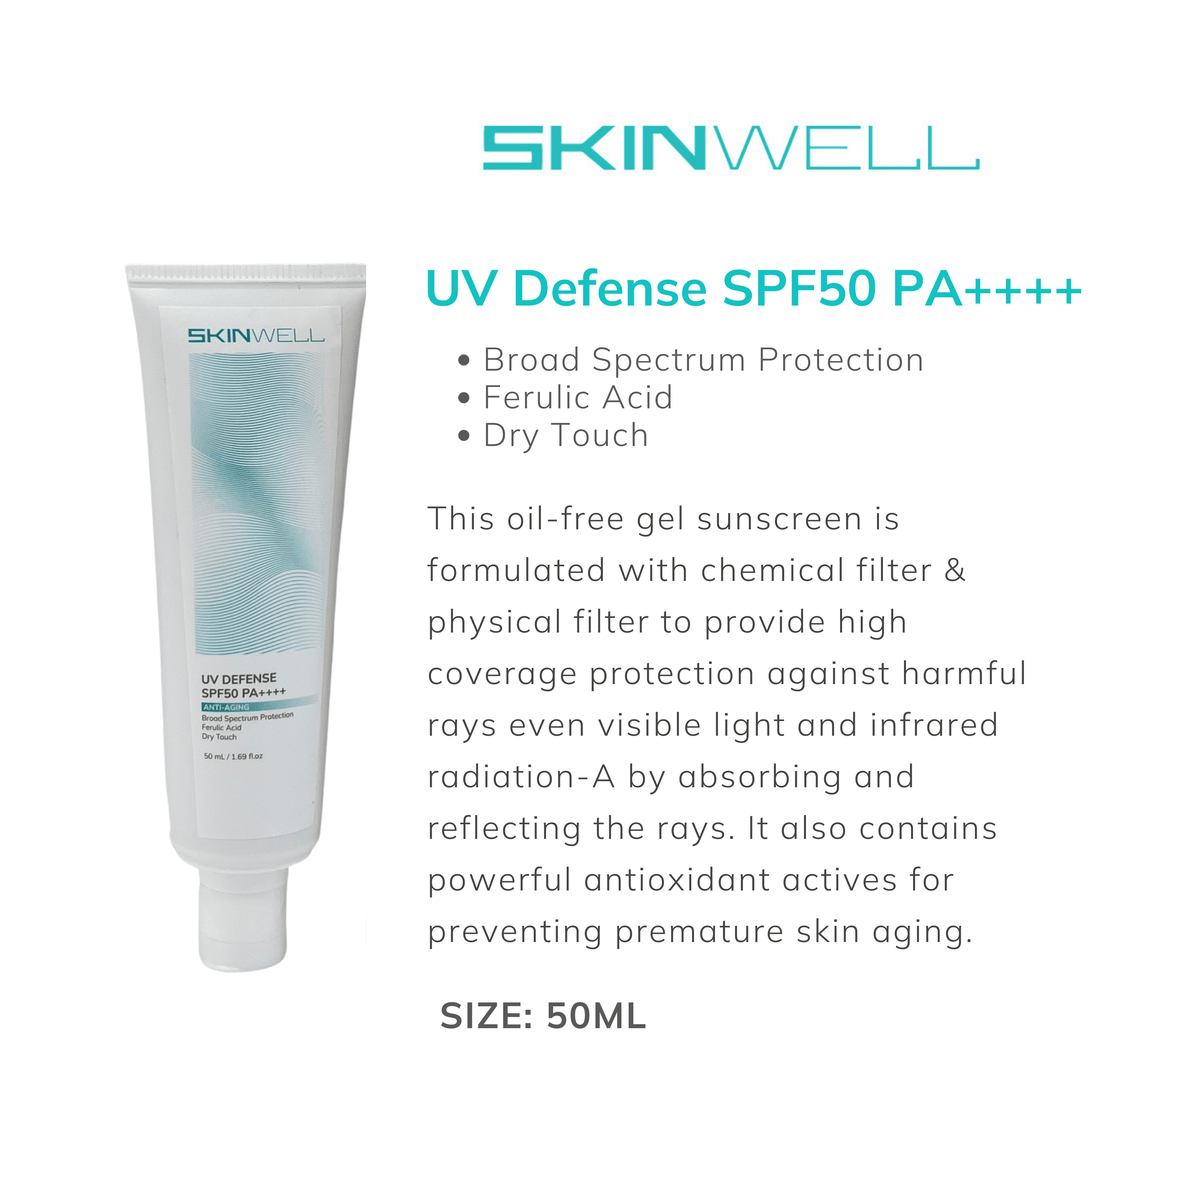 SKINWELL UV DEFENSE SPF50 PA++++